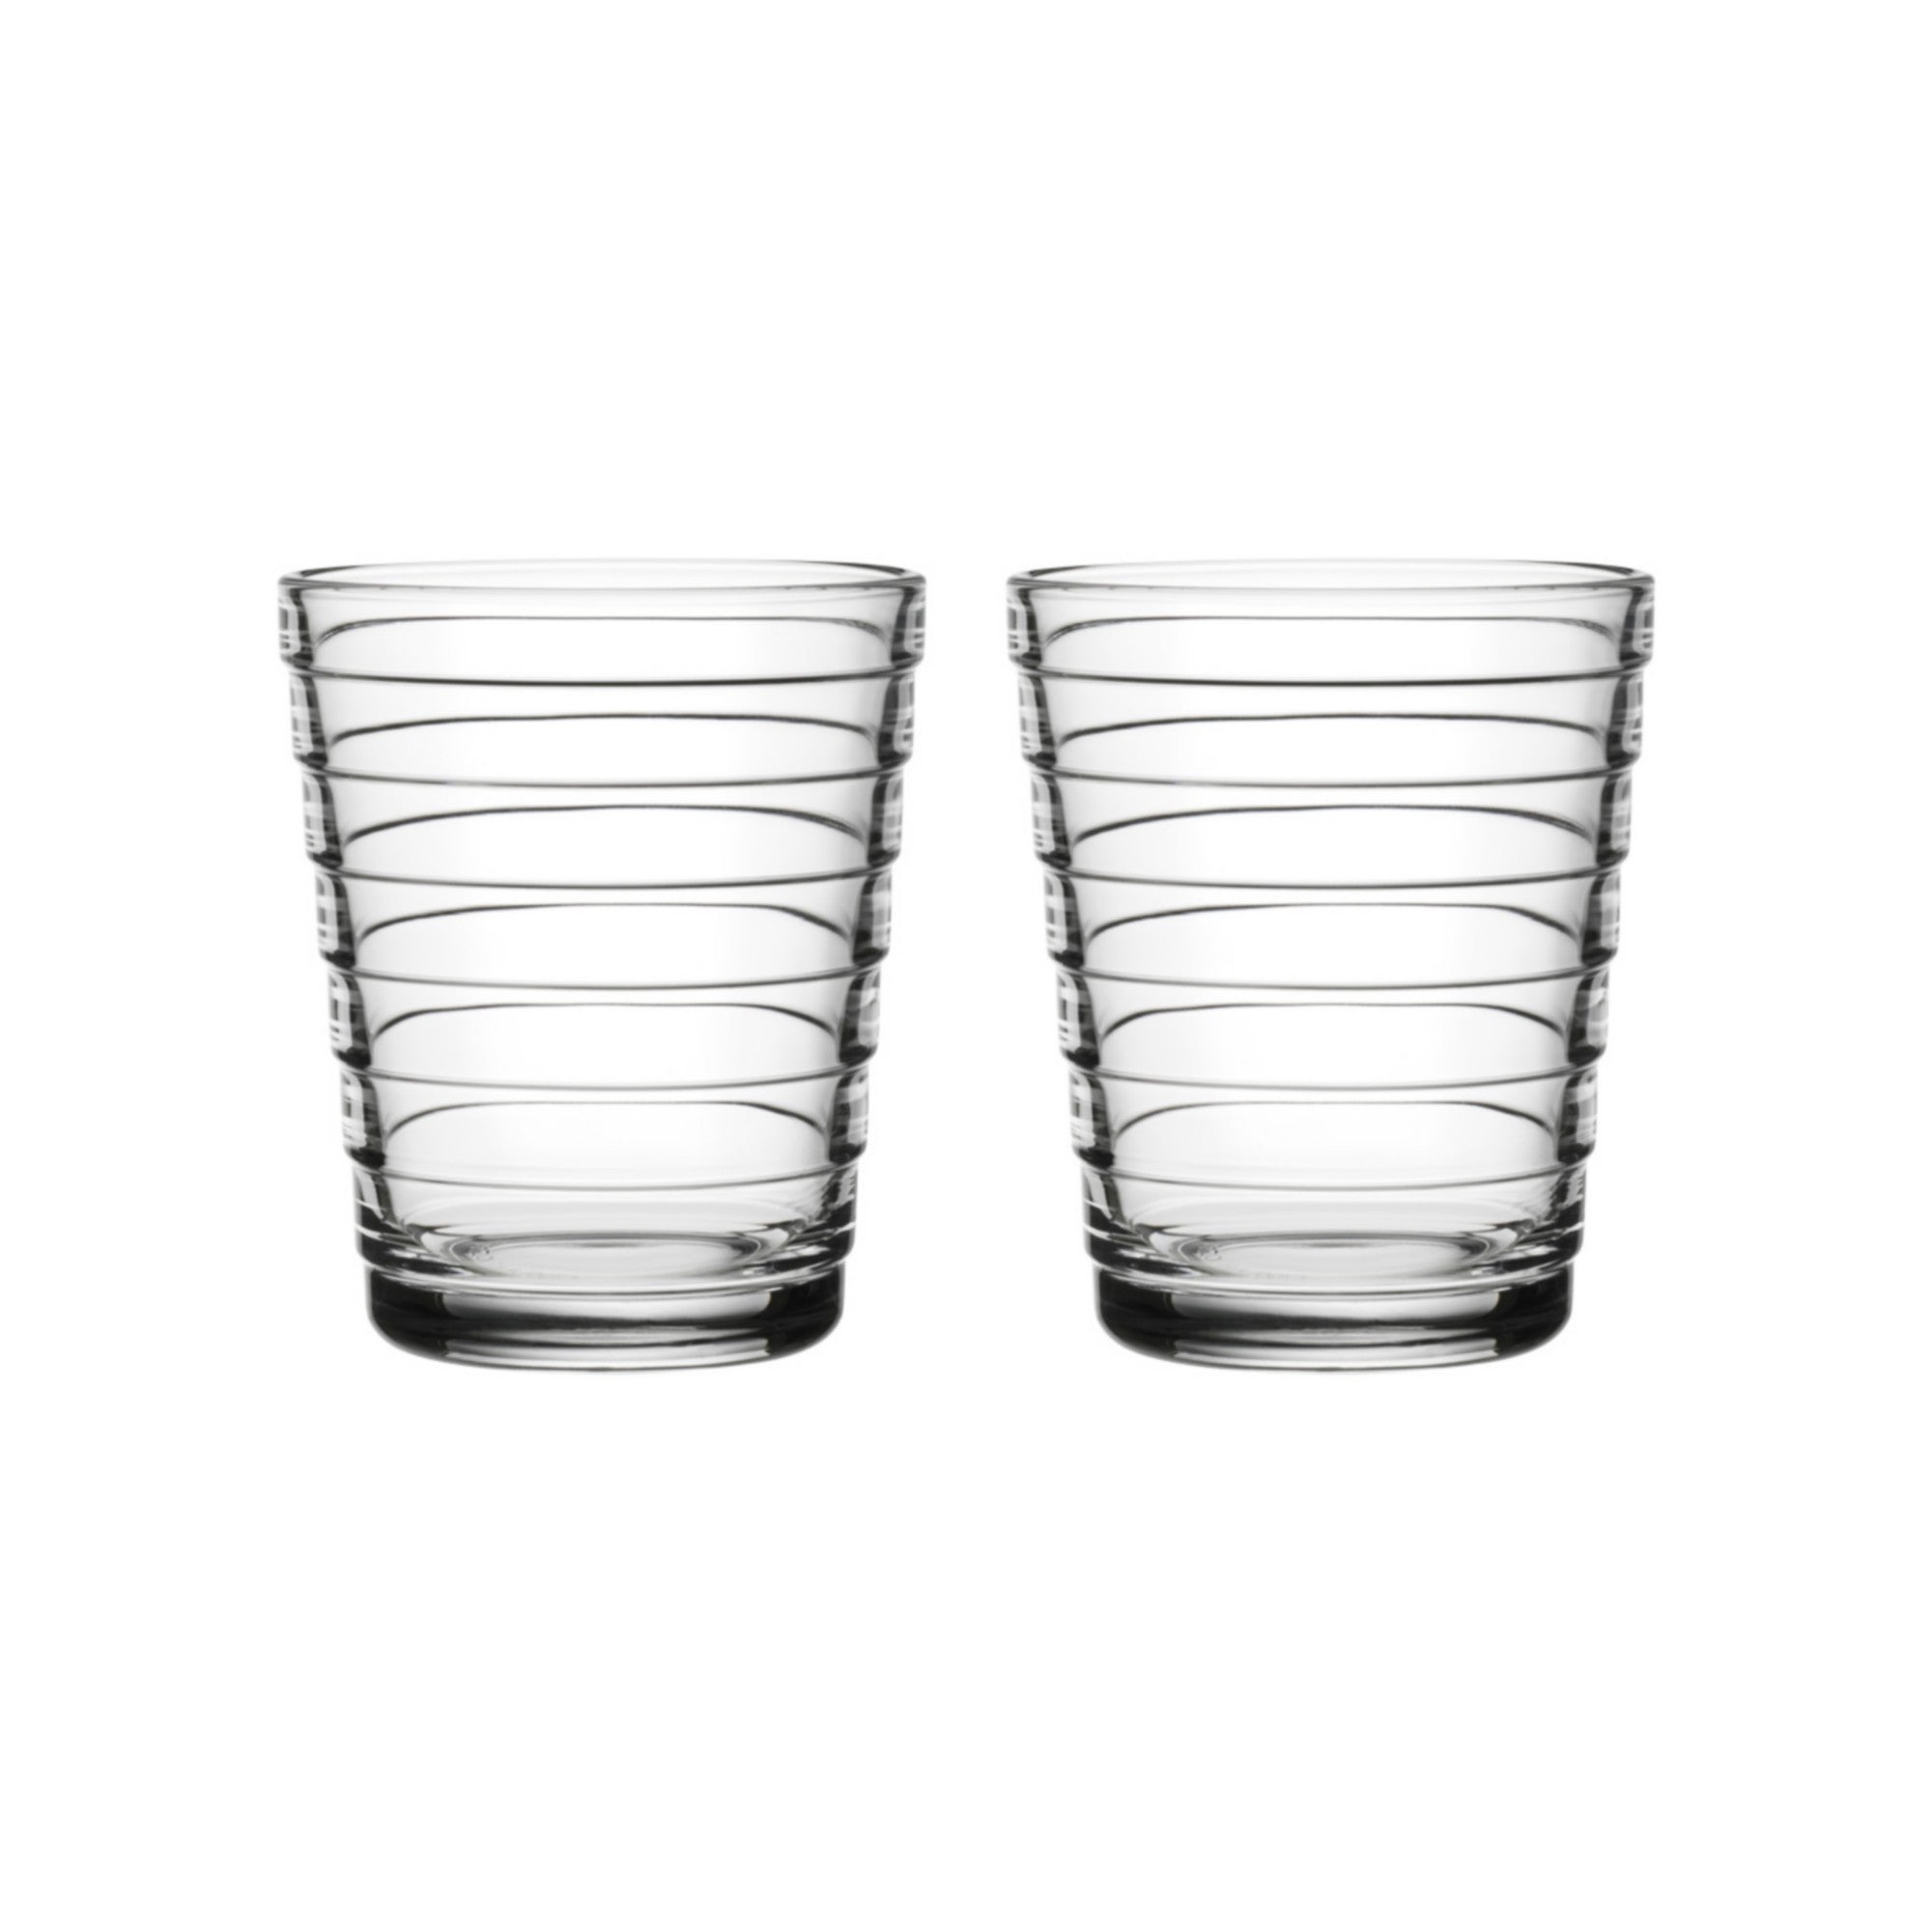 littala Aino Alto Clear Large Tumbler Glasses - set of 3